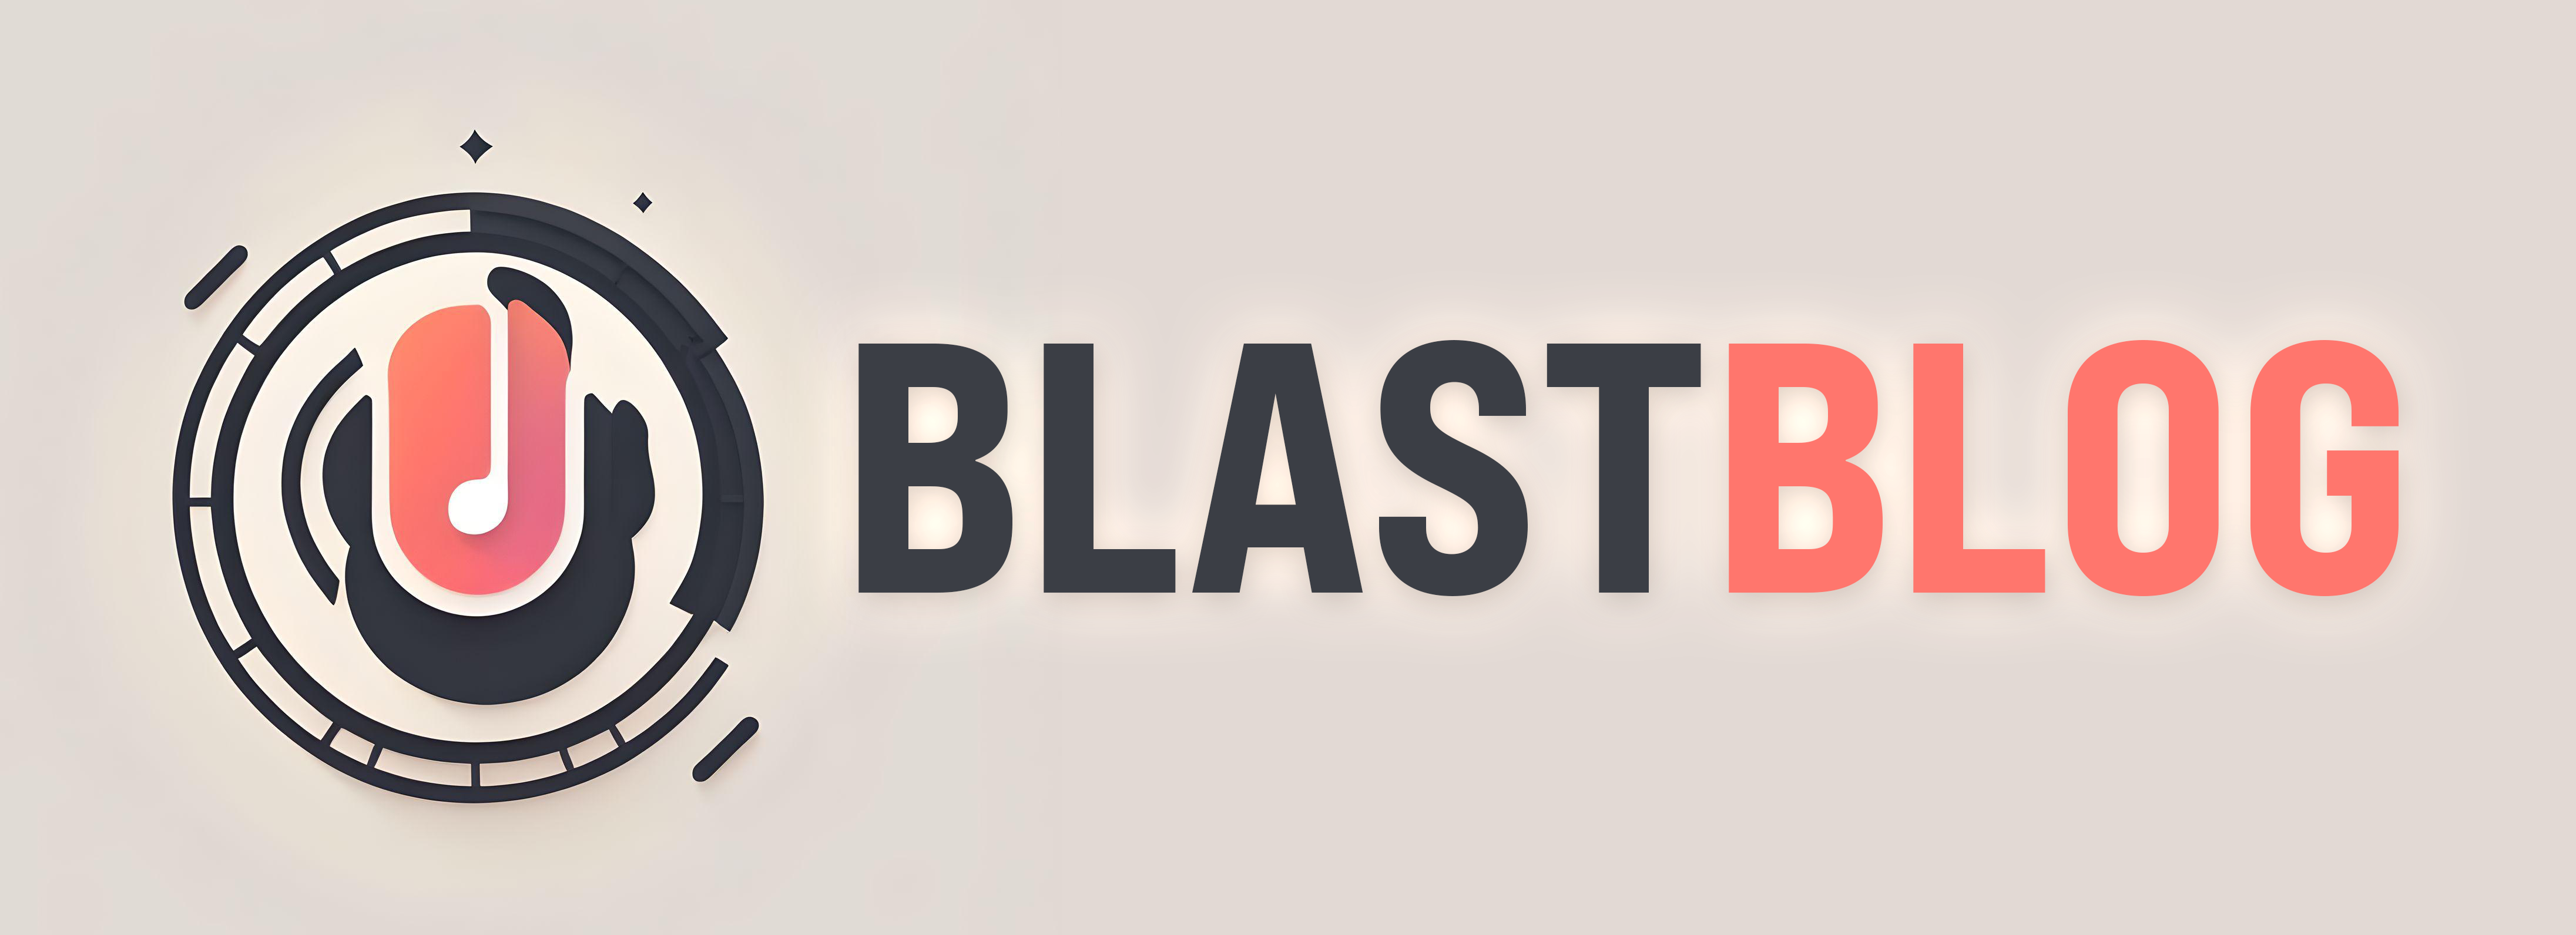 Blastblog